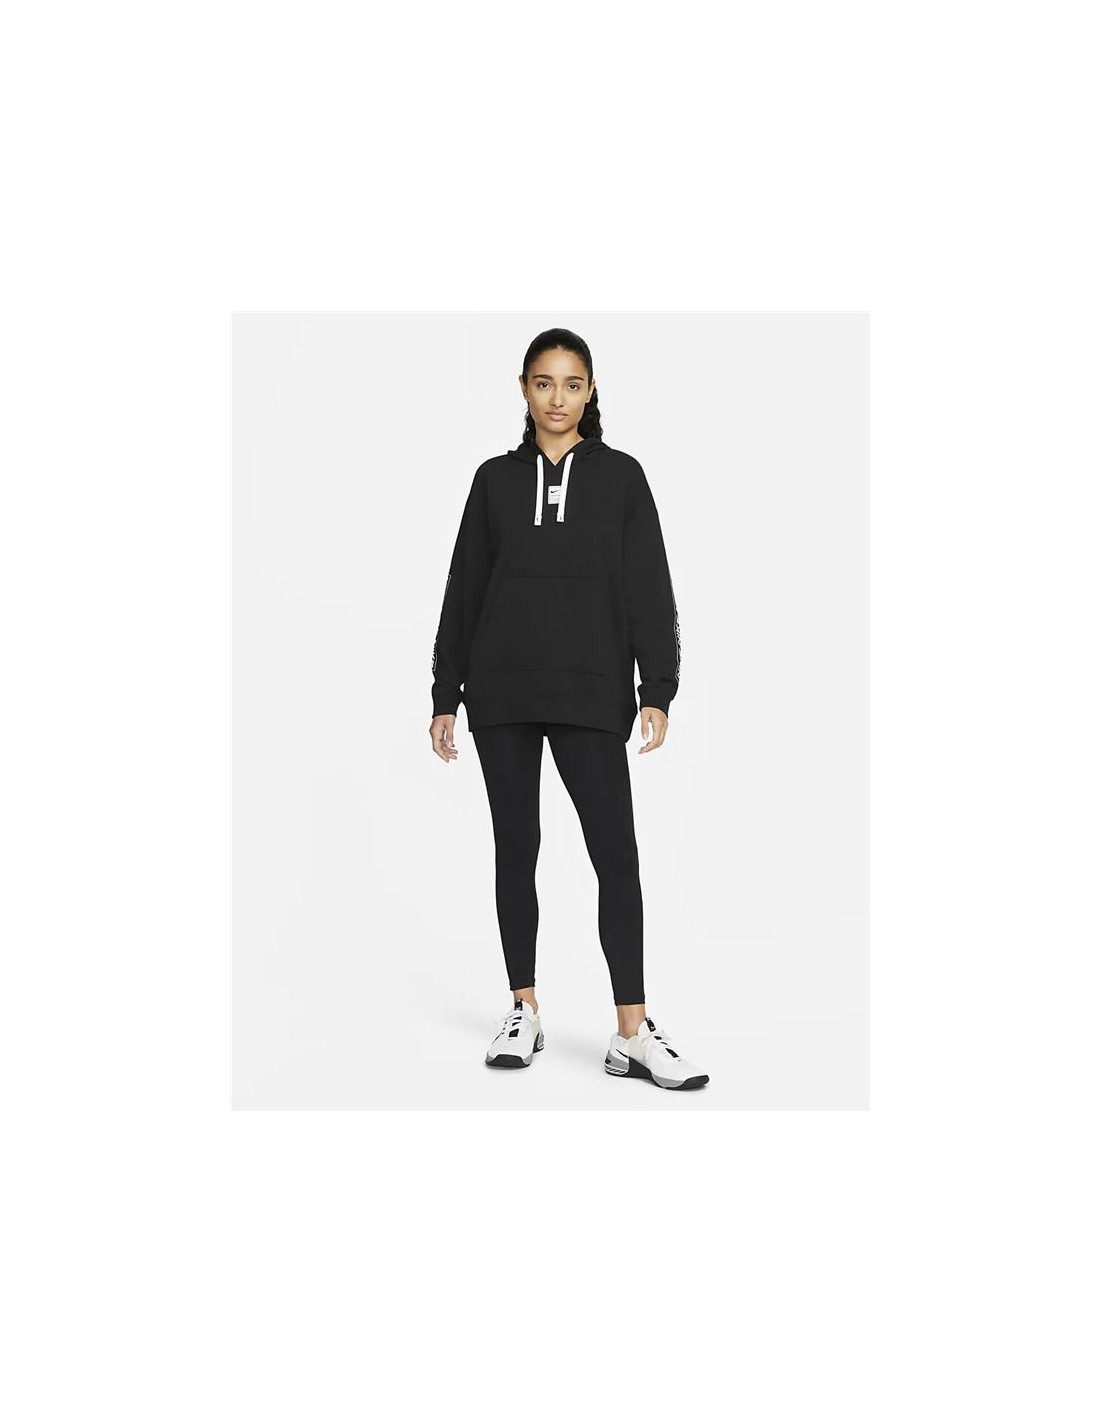 Sudadera Nike Negra Capucha Mujer